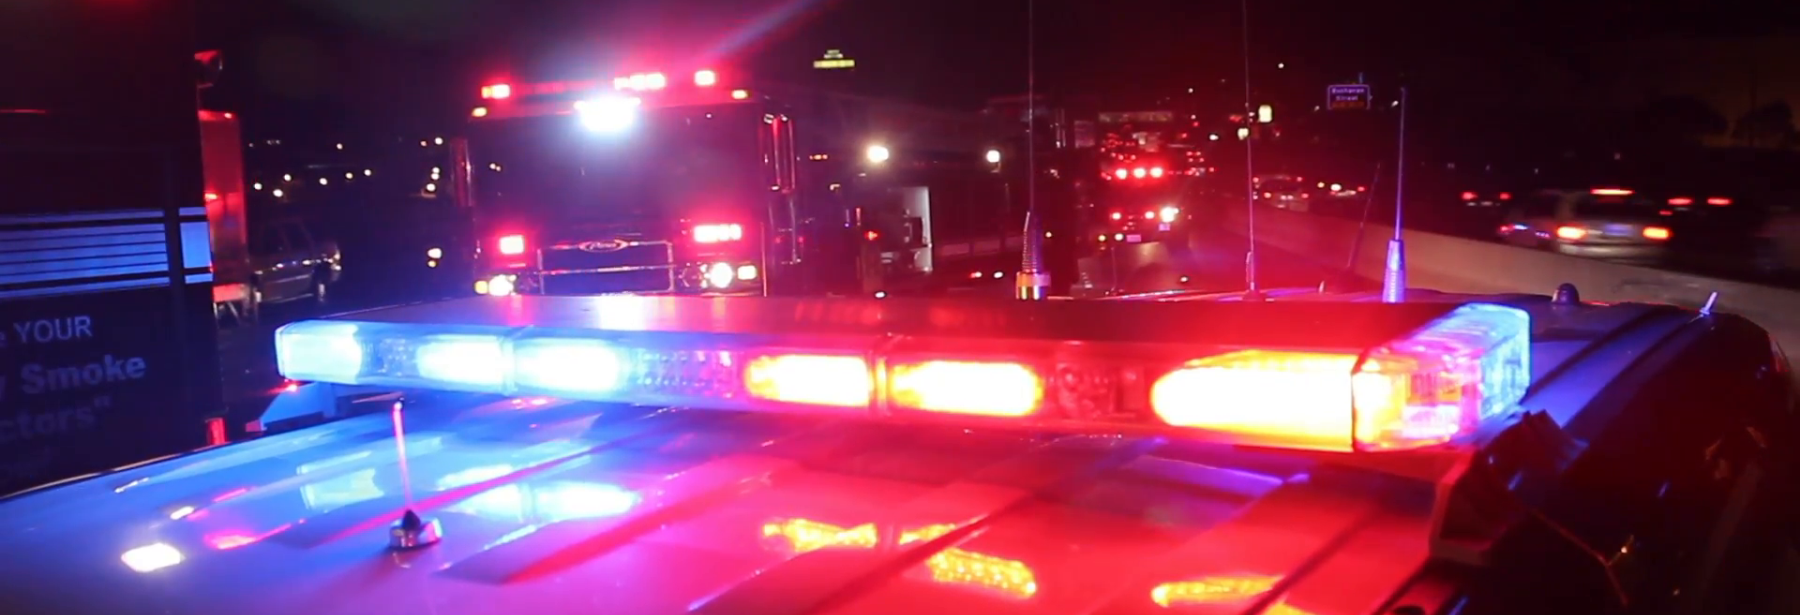 emergency vehicle lights at night